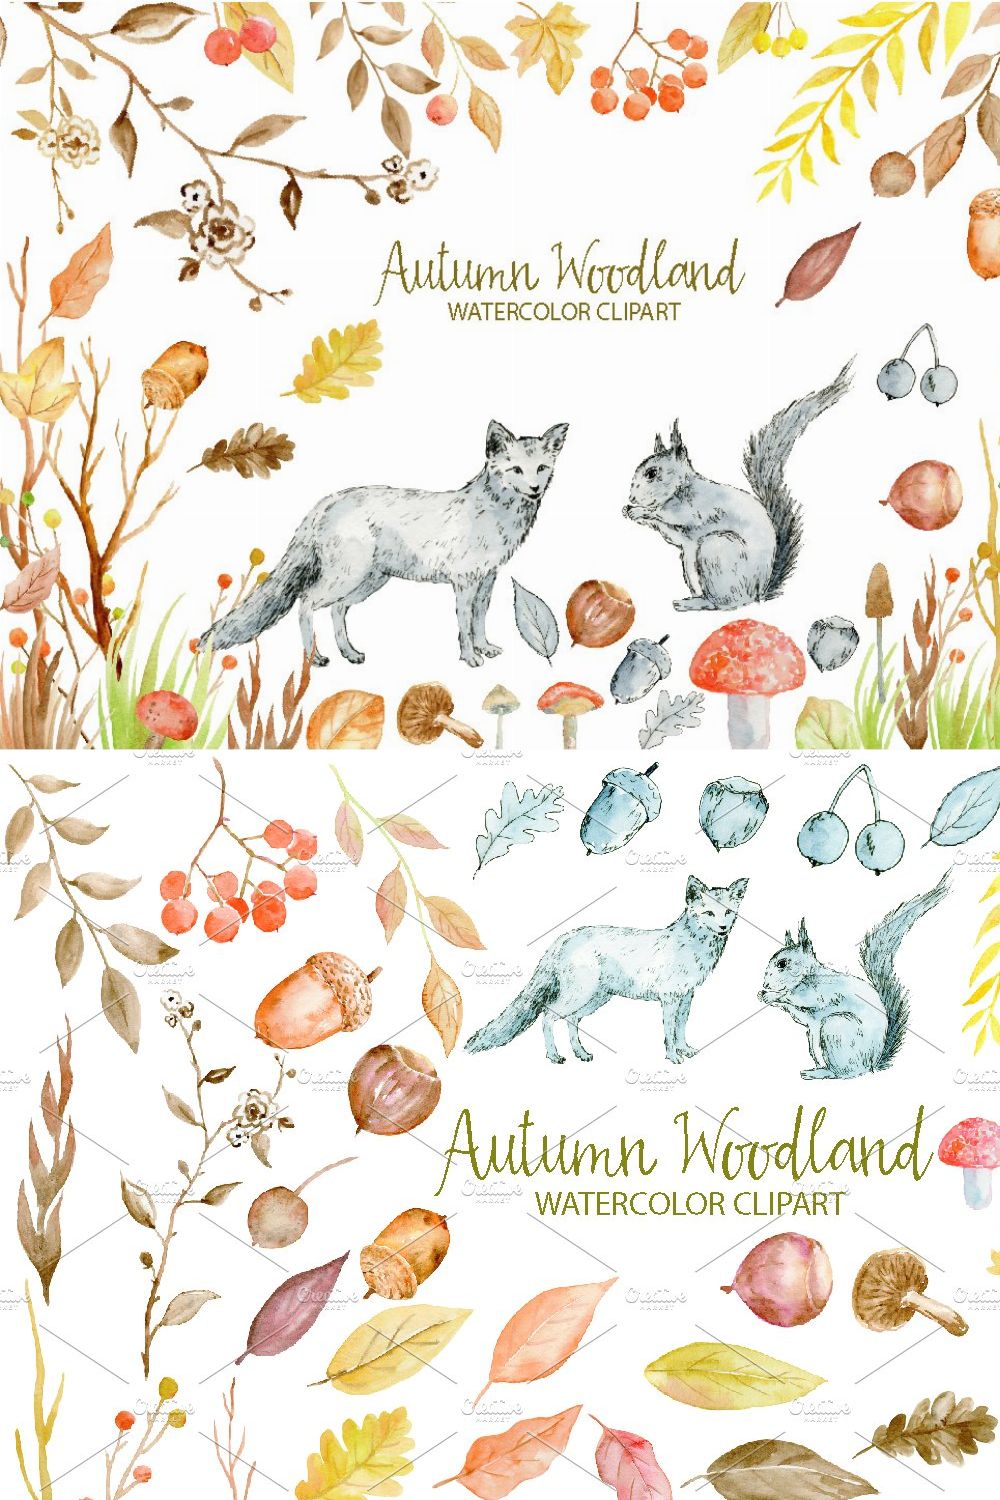 Watercolor Clipart Autumn Woodland pinterest preview image.